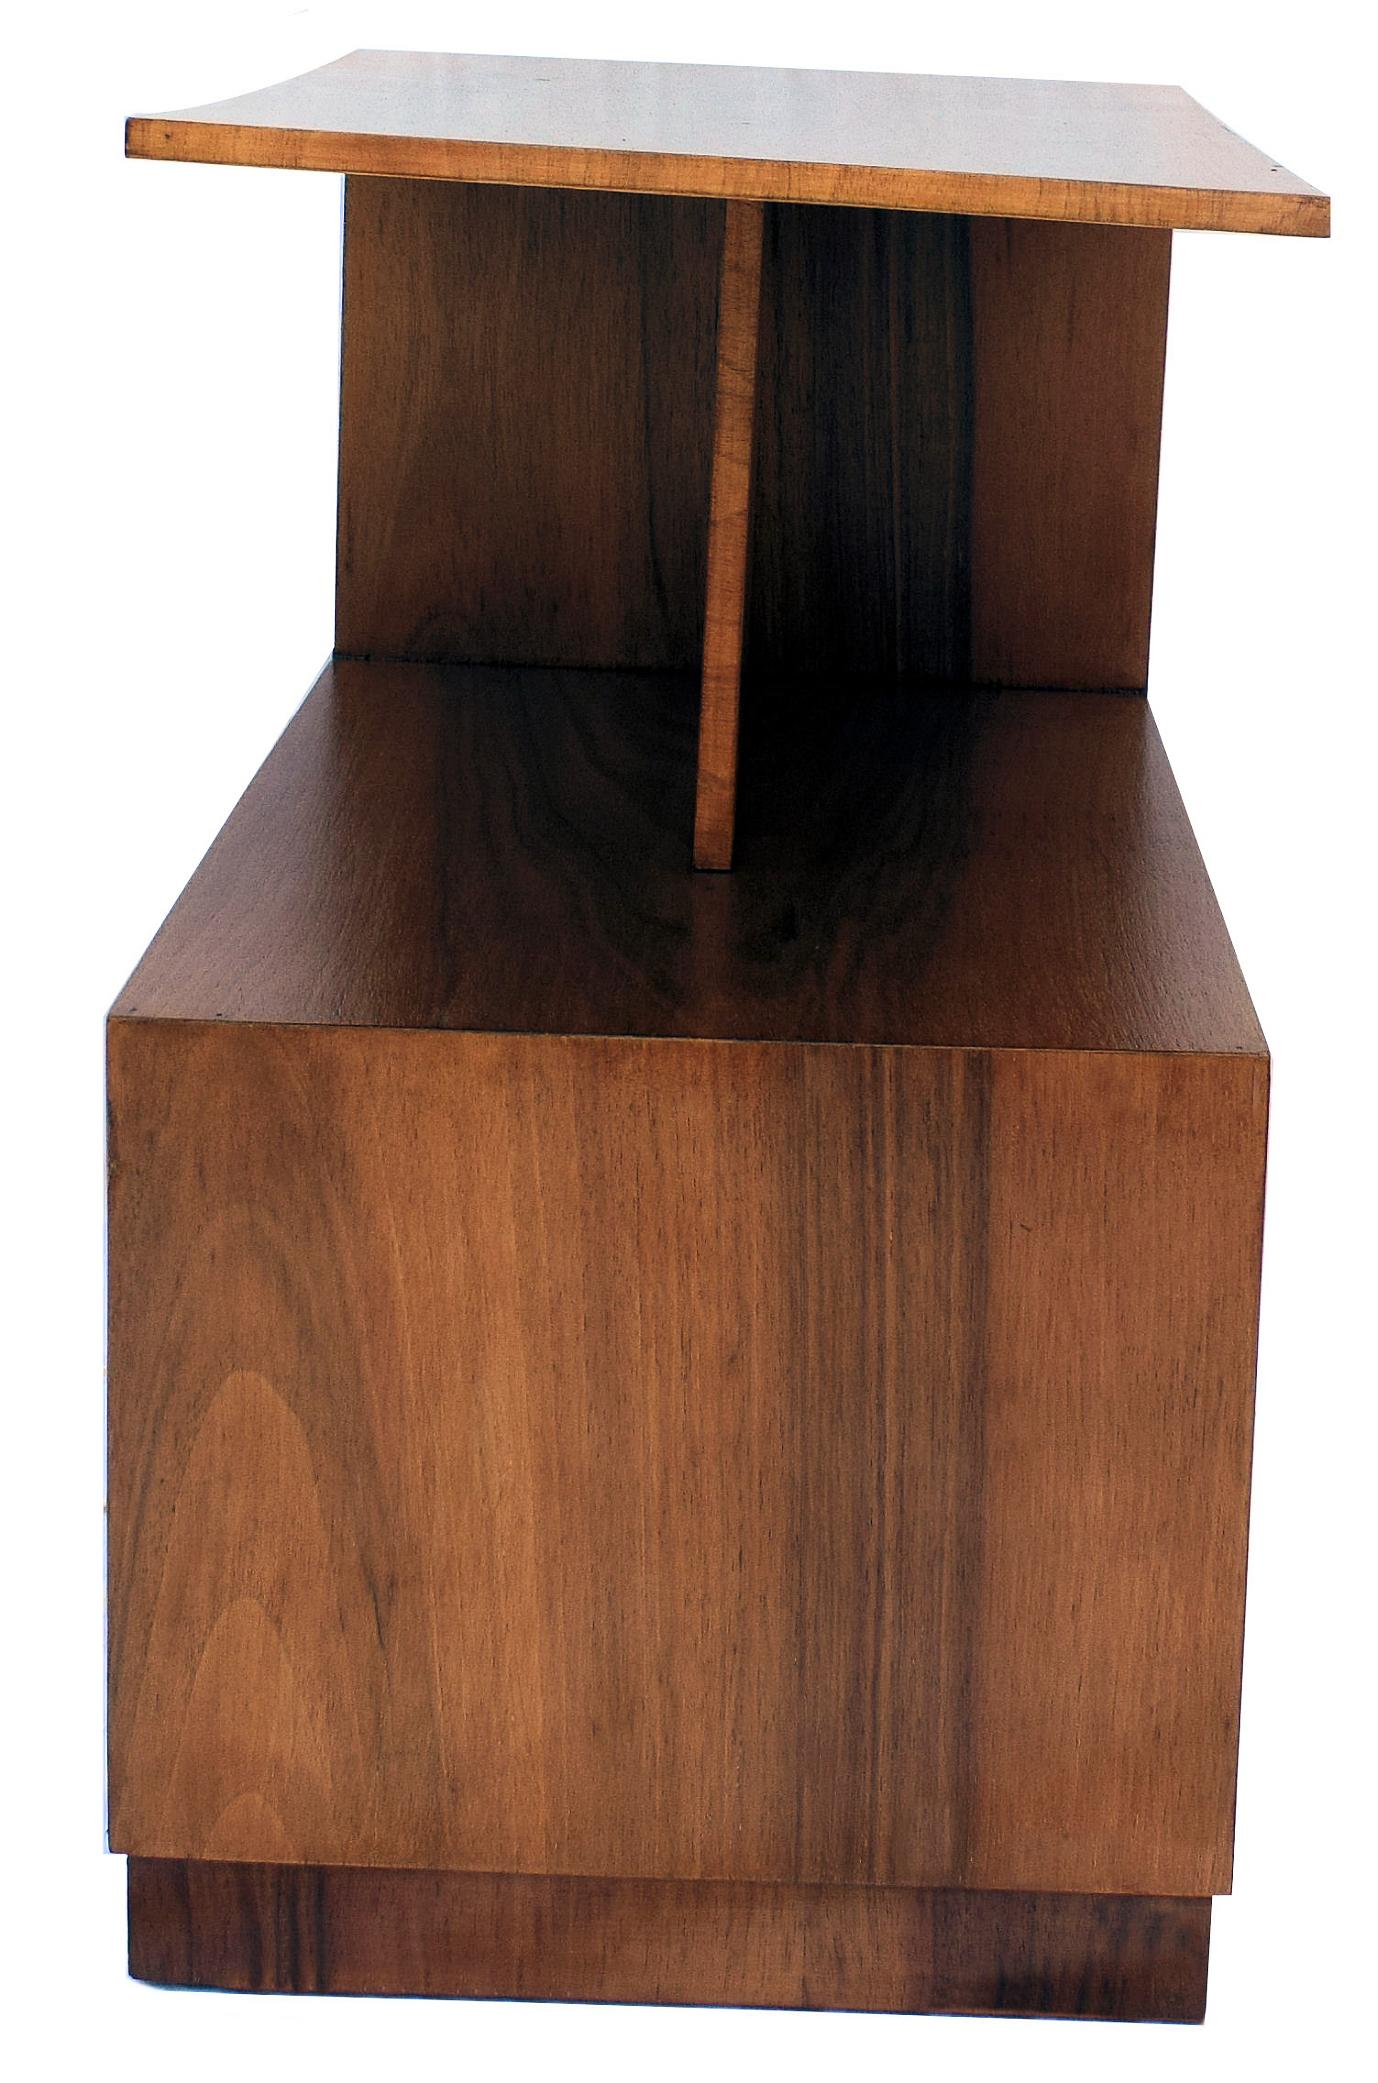 20th Century Art Deco Geometric Modernist Walnut Two-Tier Table